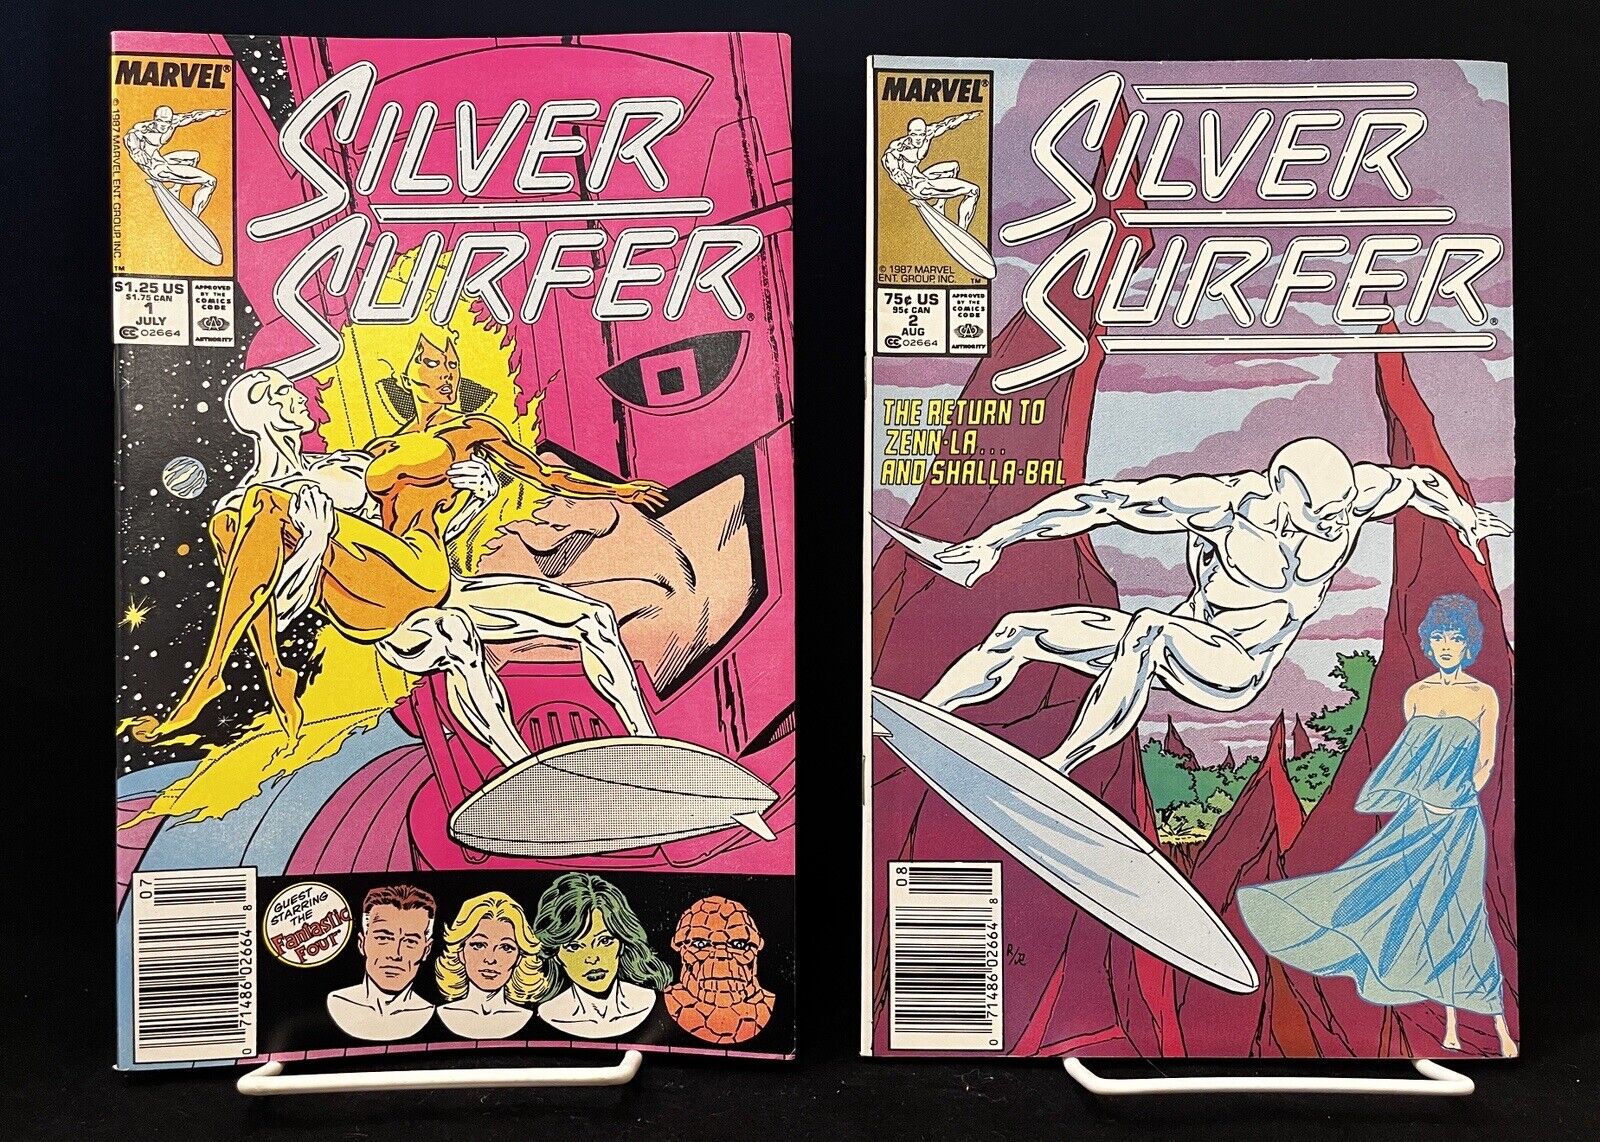 SET: 🌌 SILVER SURFER #1 & 2 (1987) ENGLEHART & ROGERS PREOWNED MARVEL COMICS